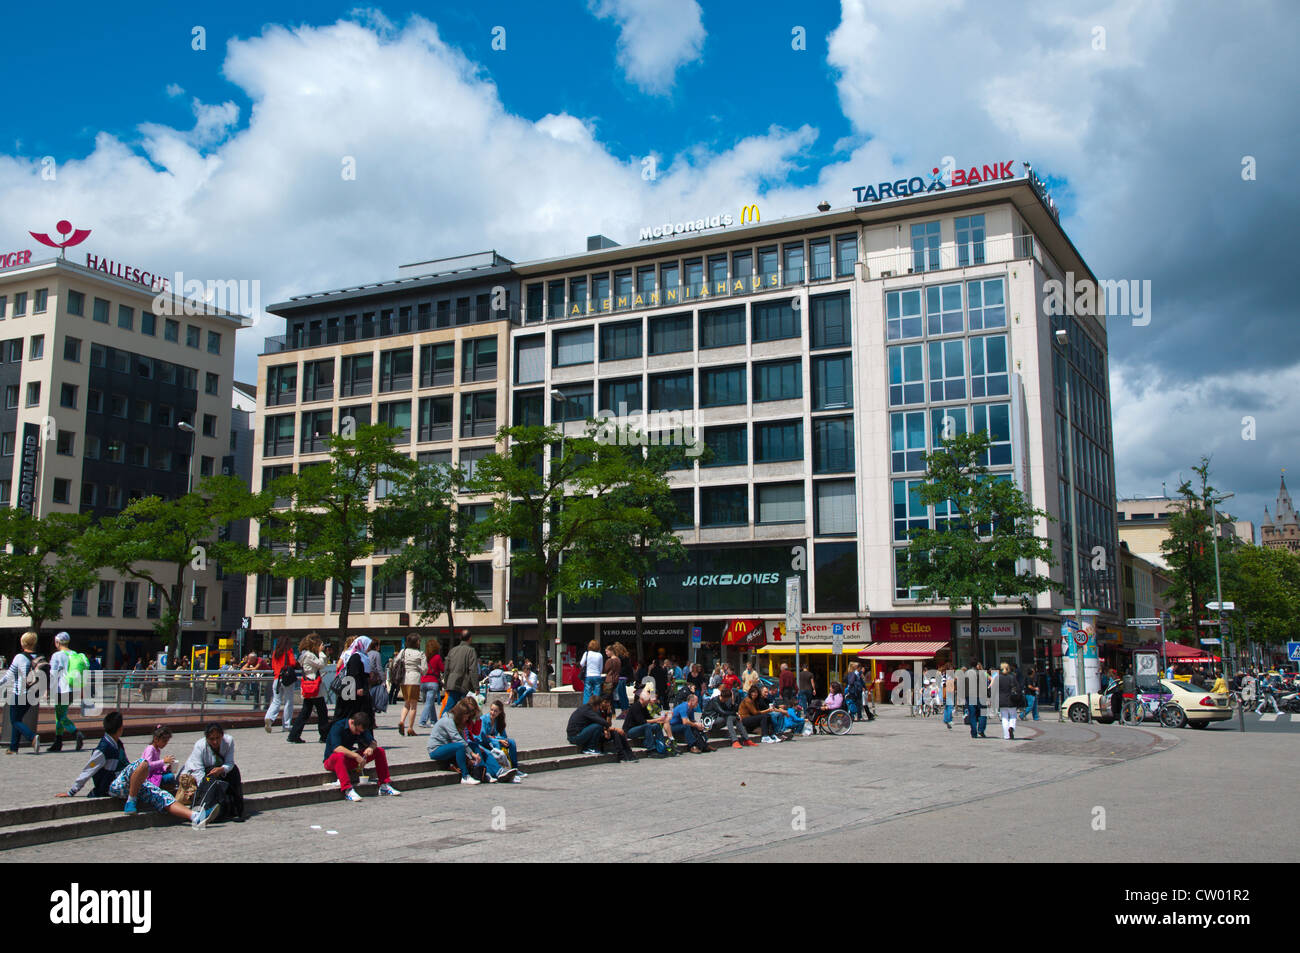 Konstablerwache square Frankfurt am Main state of Hesse Germany Europe Stock Photo